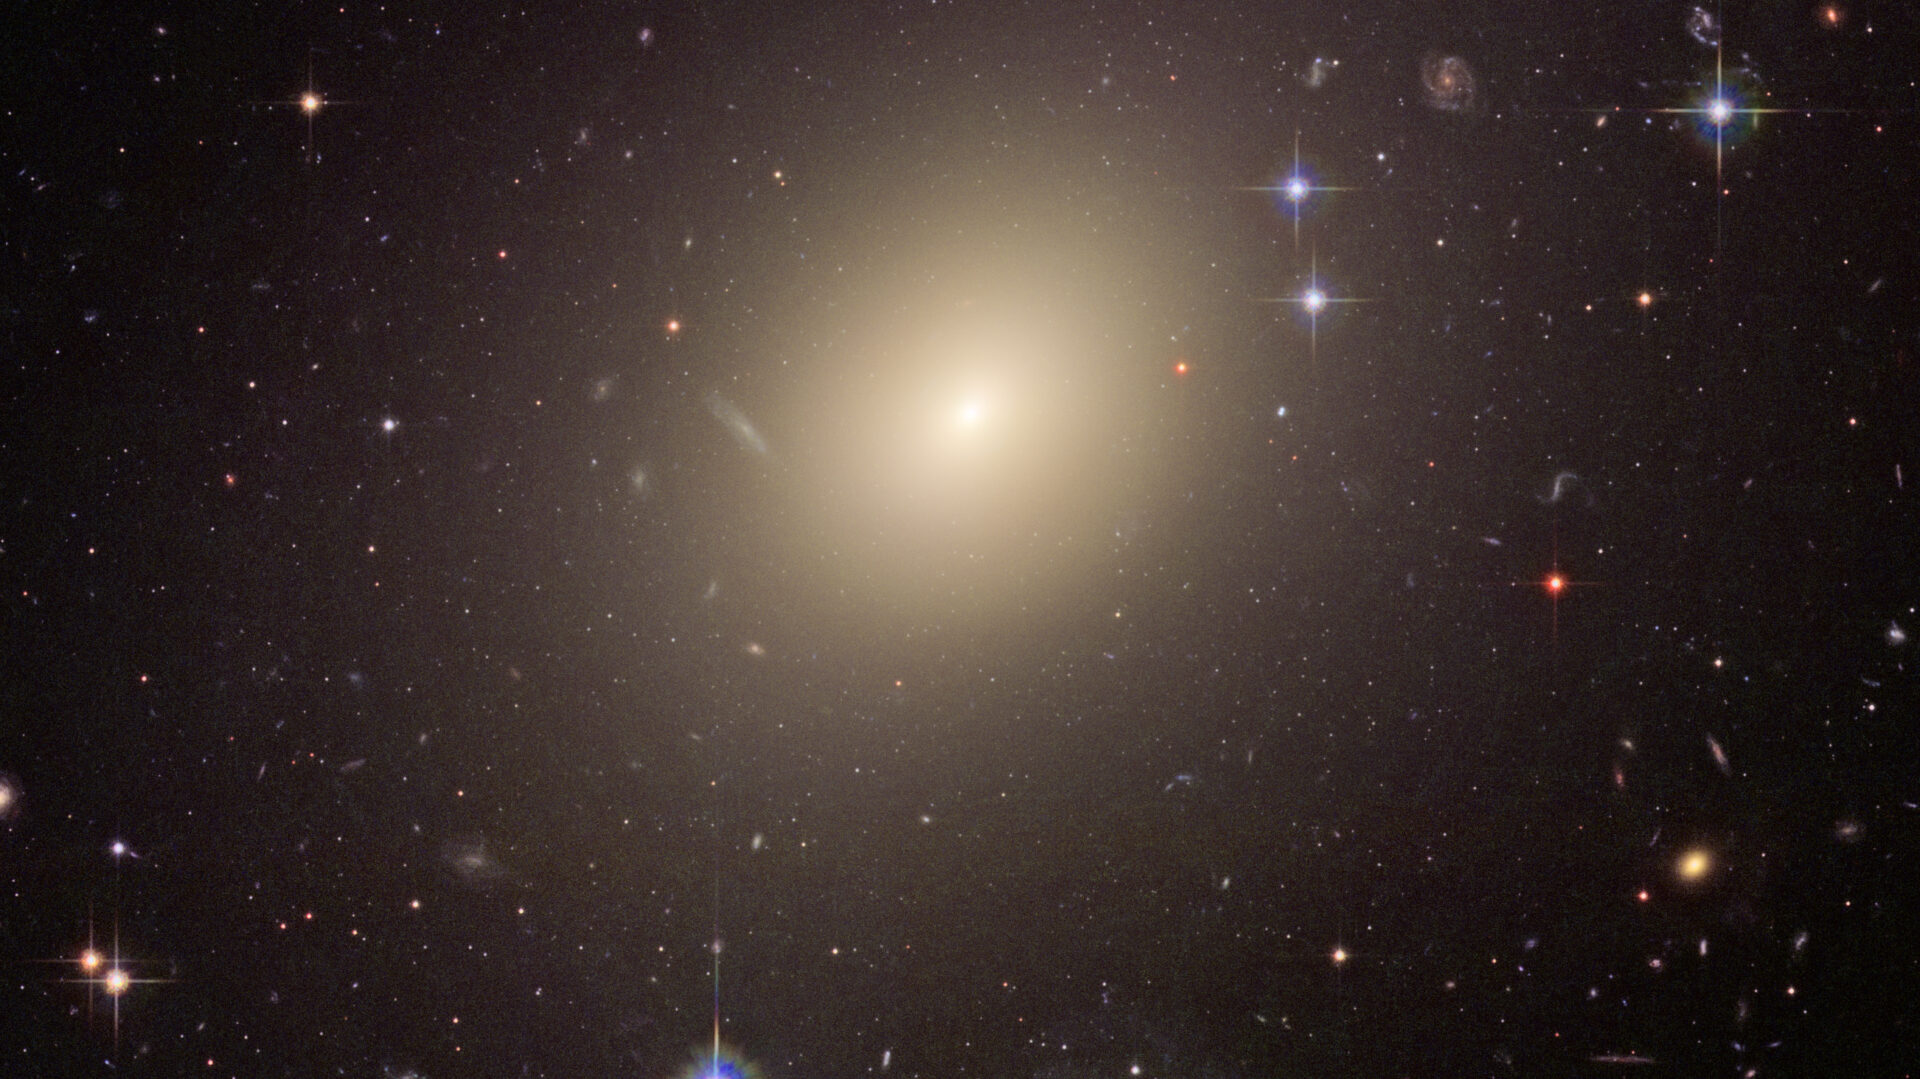 ESO 325-G004